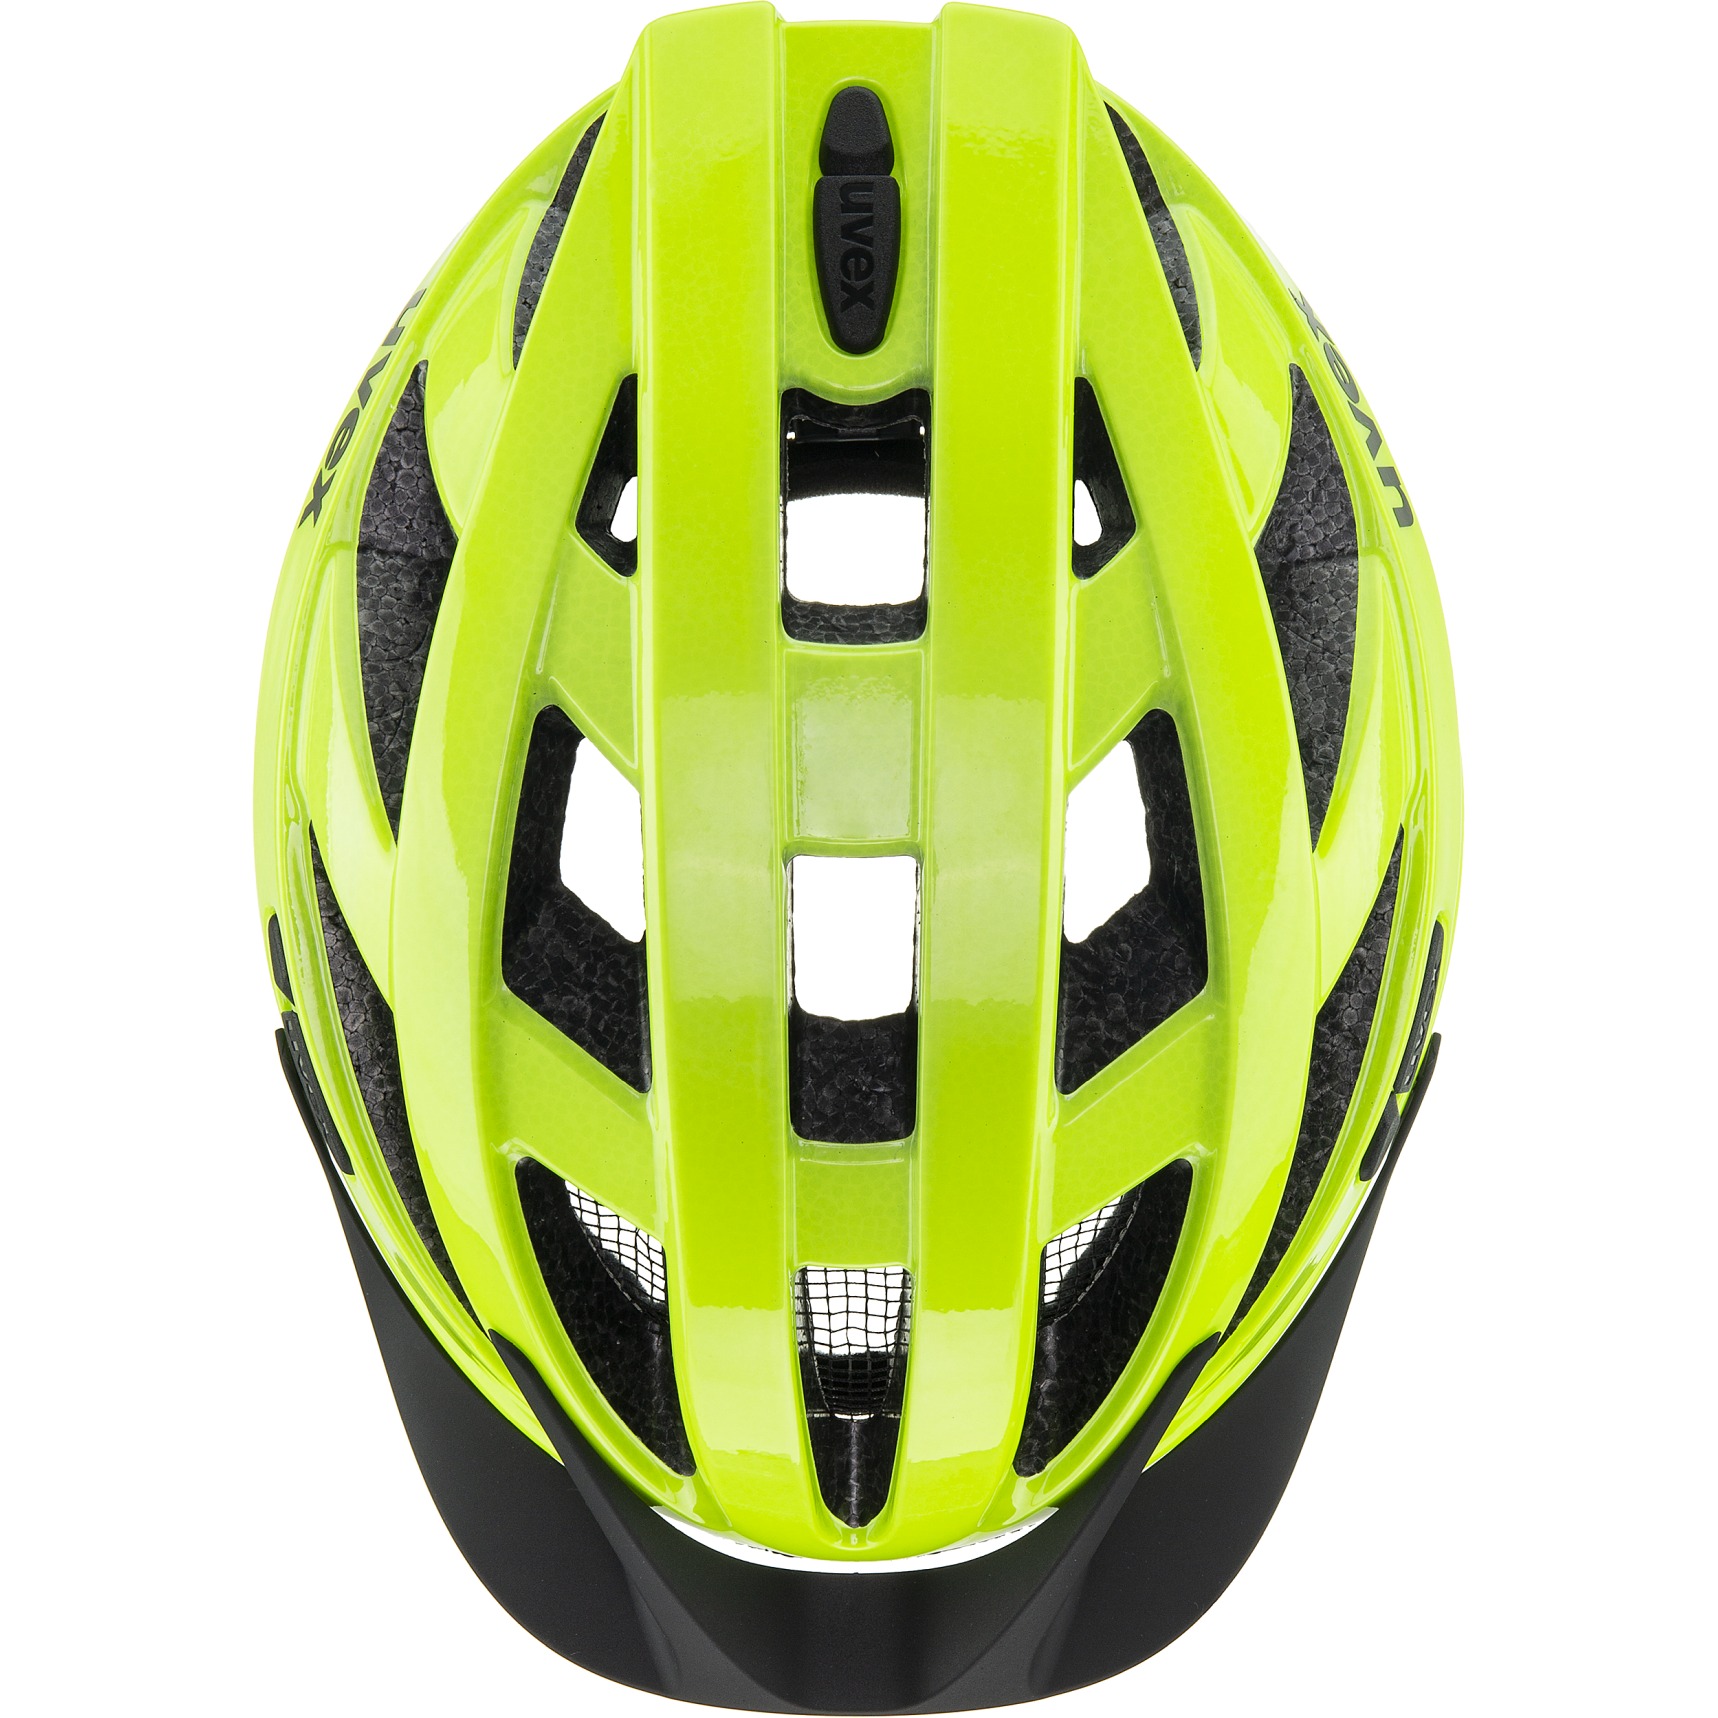 Helmbeutel Neon gelb - helmade Helm Accessoires